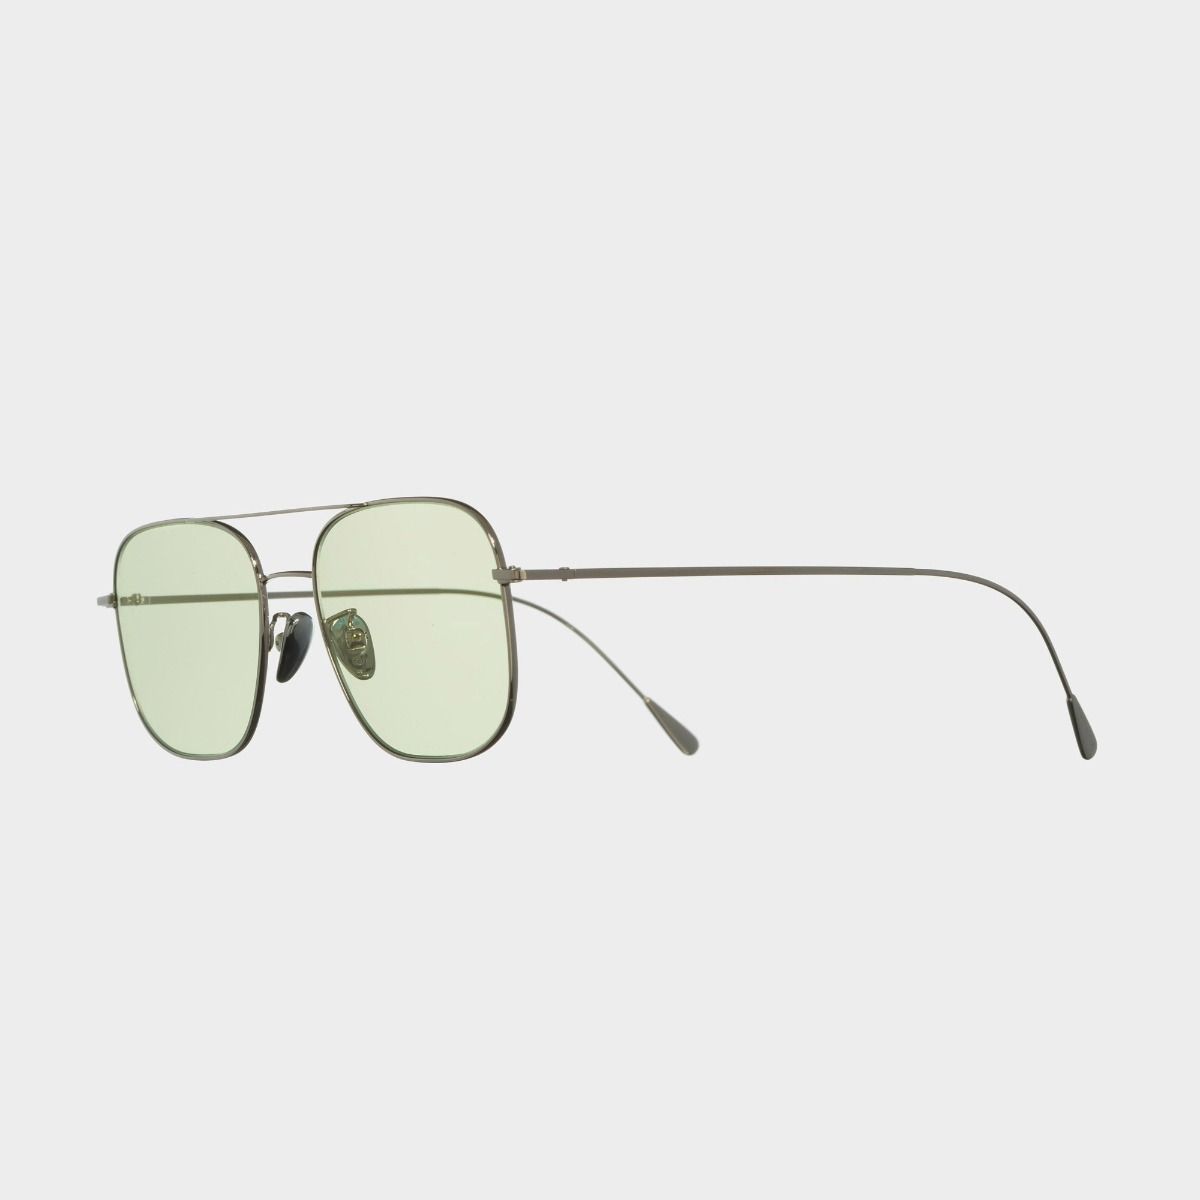 1267 Palladium Plated Square Sunglasses-Pale Green